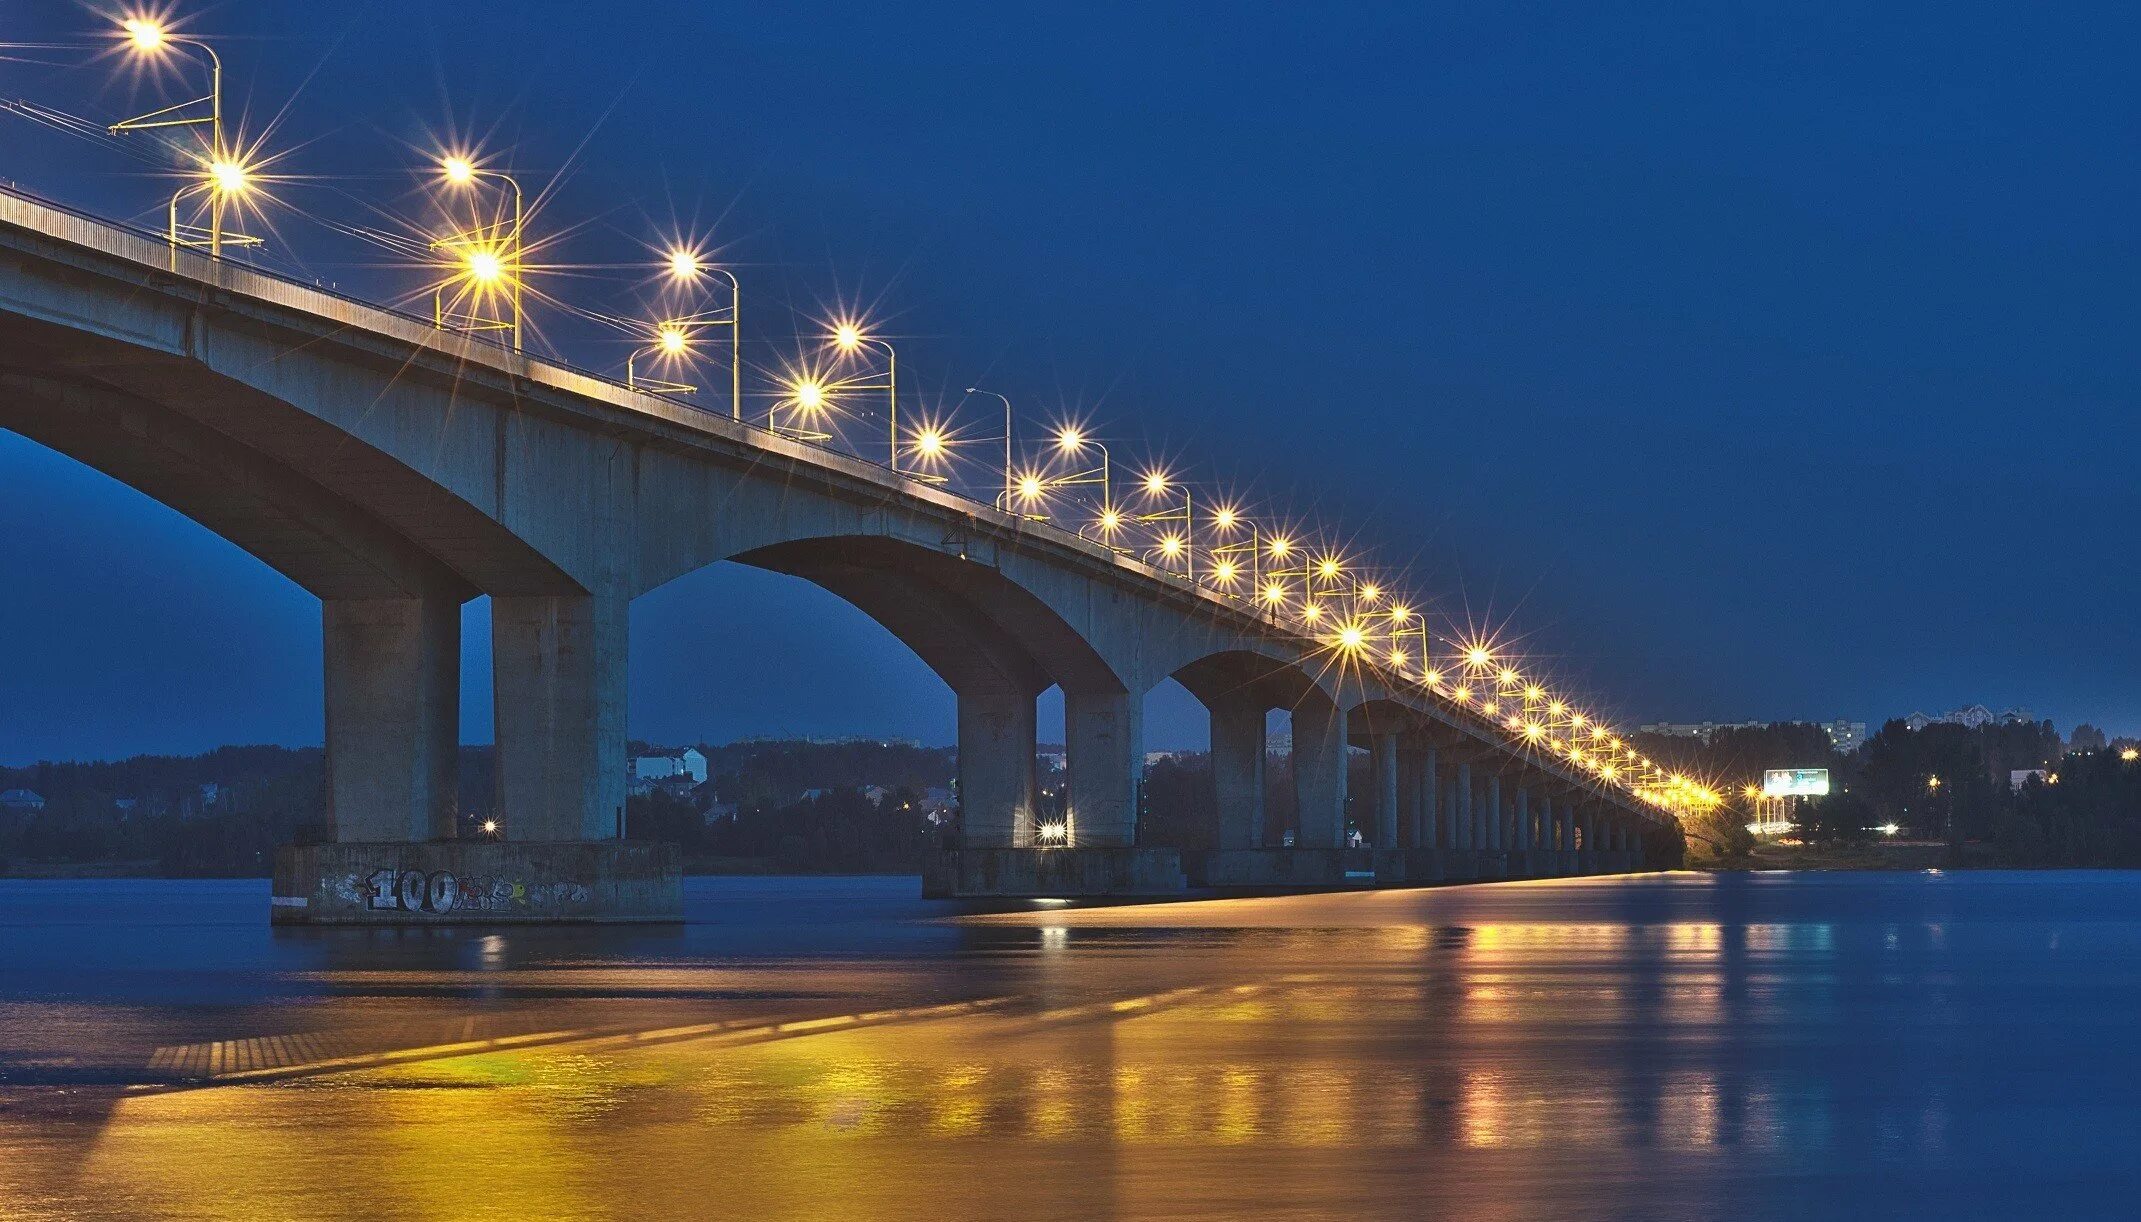 Поступи волгу. Мост через реку Волгу в Костроме. Кострома Волга мост. Мост Кострома река Волга. Волжский мост Кострома.